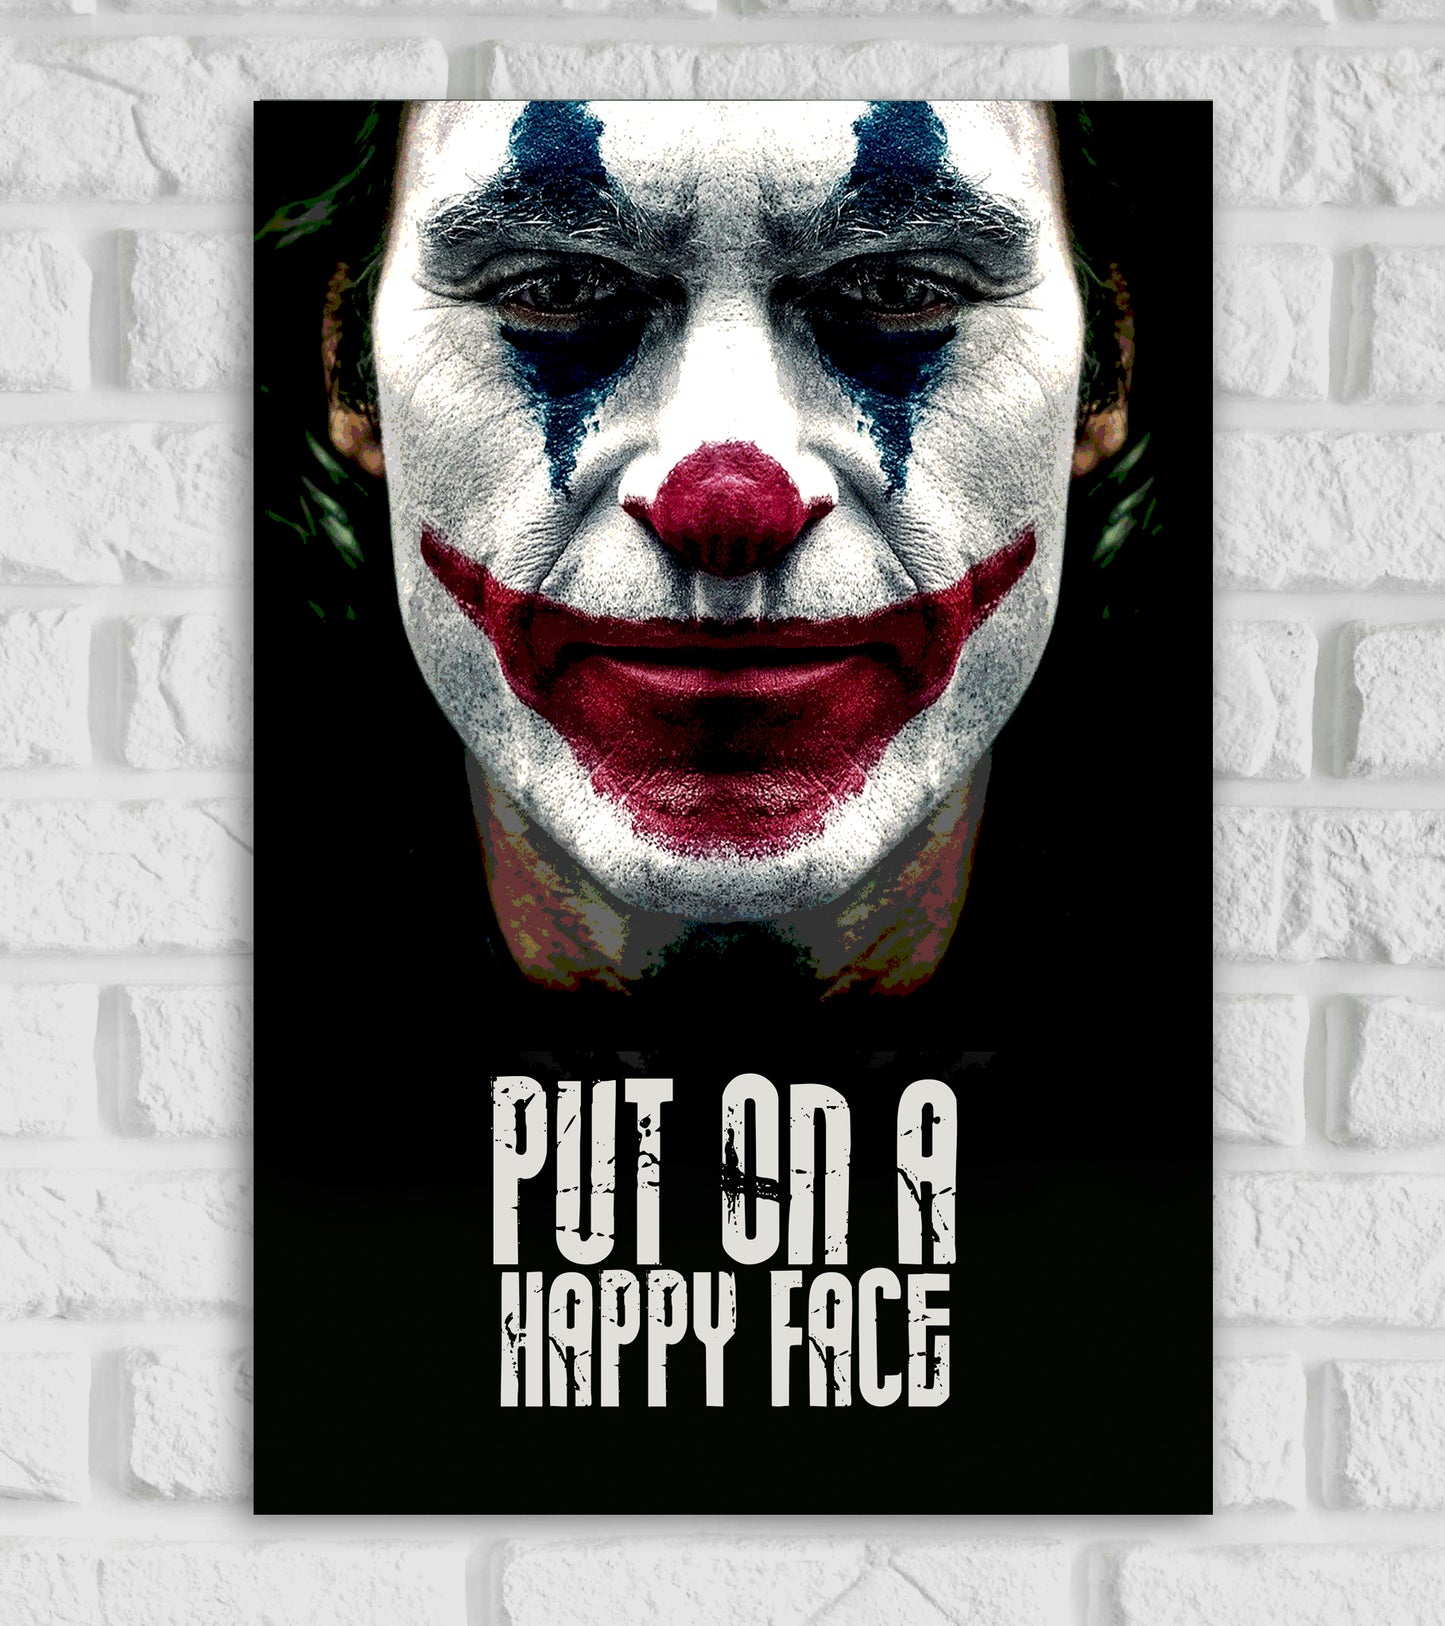 Joker Movie Art work